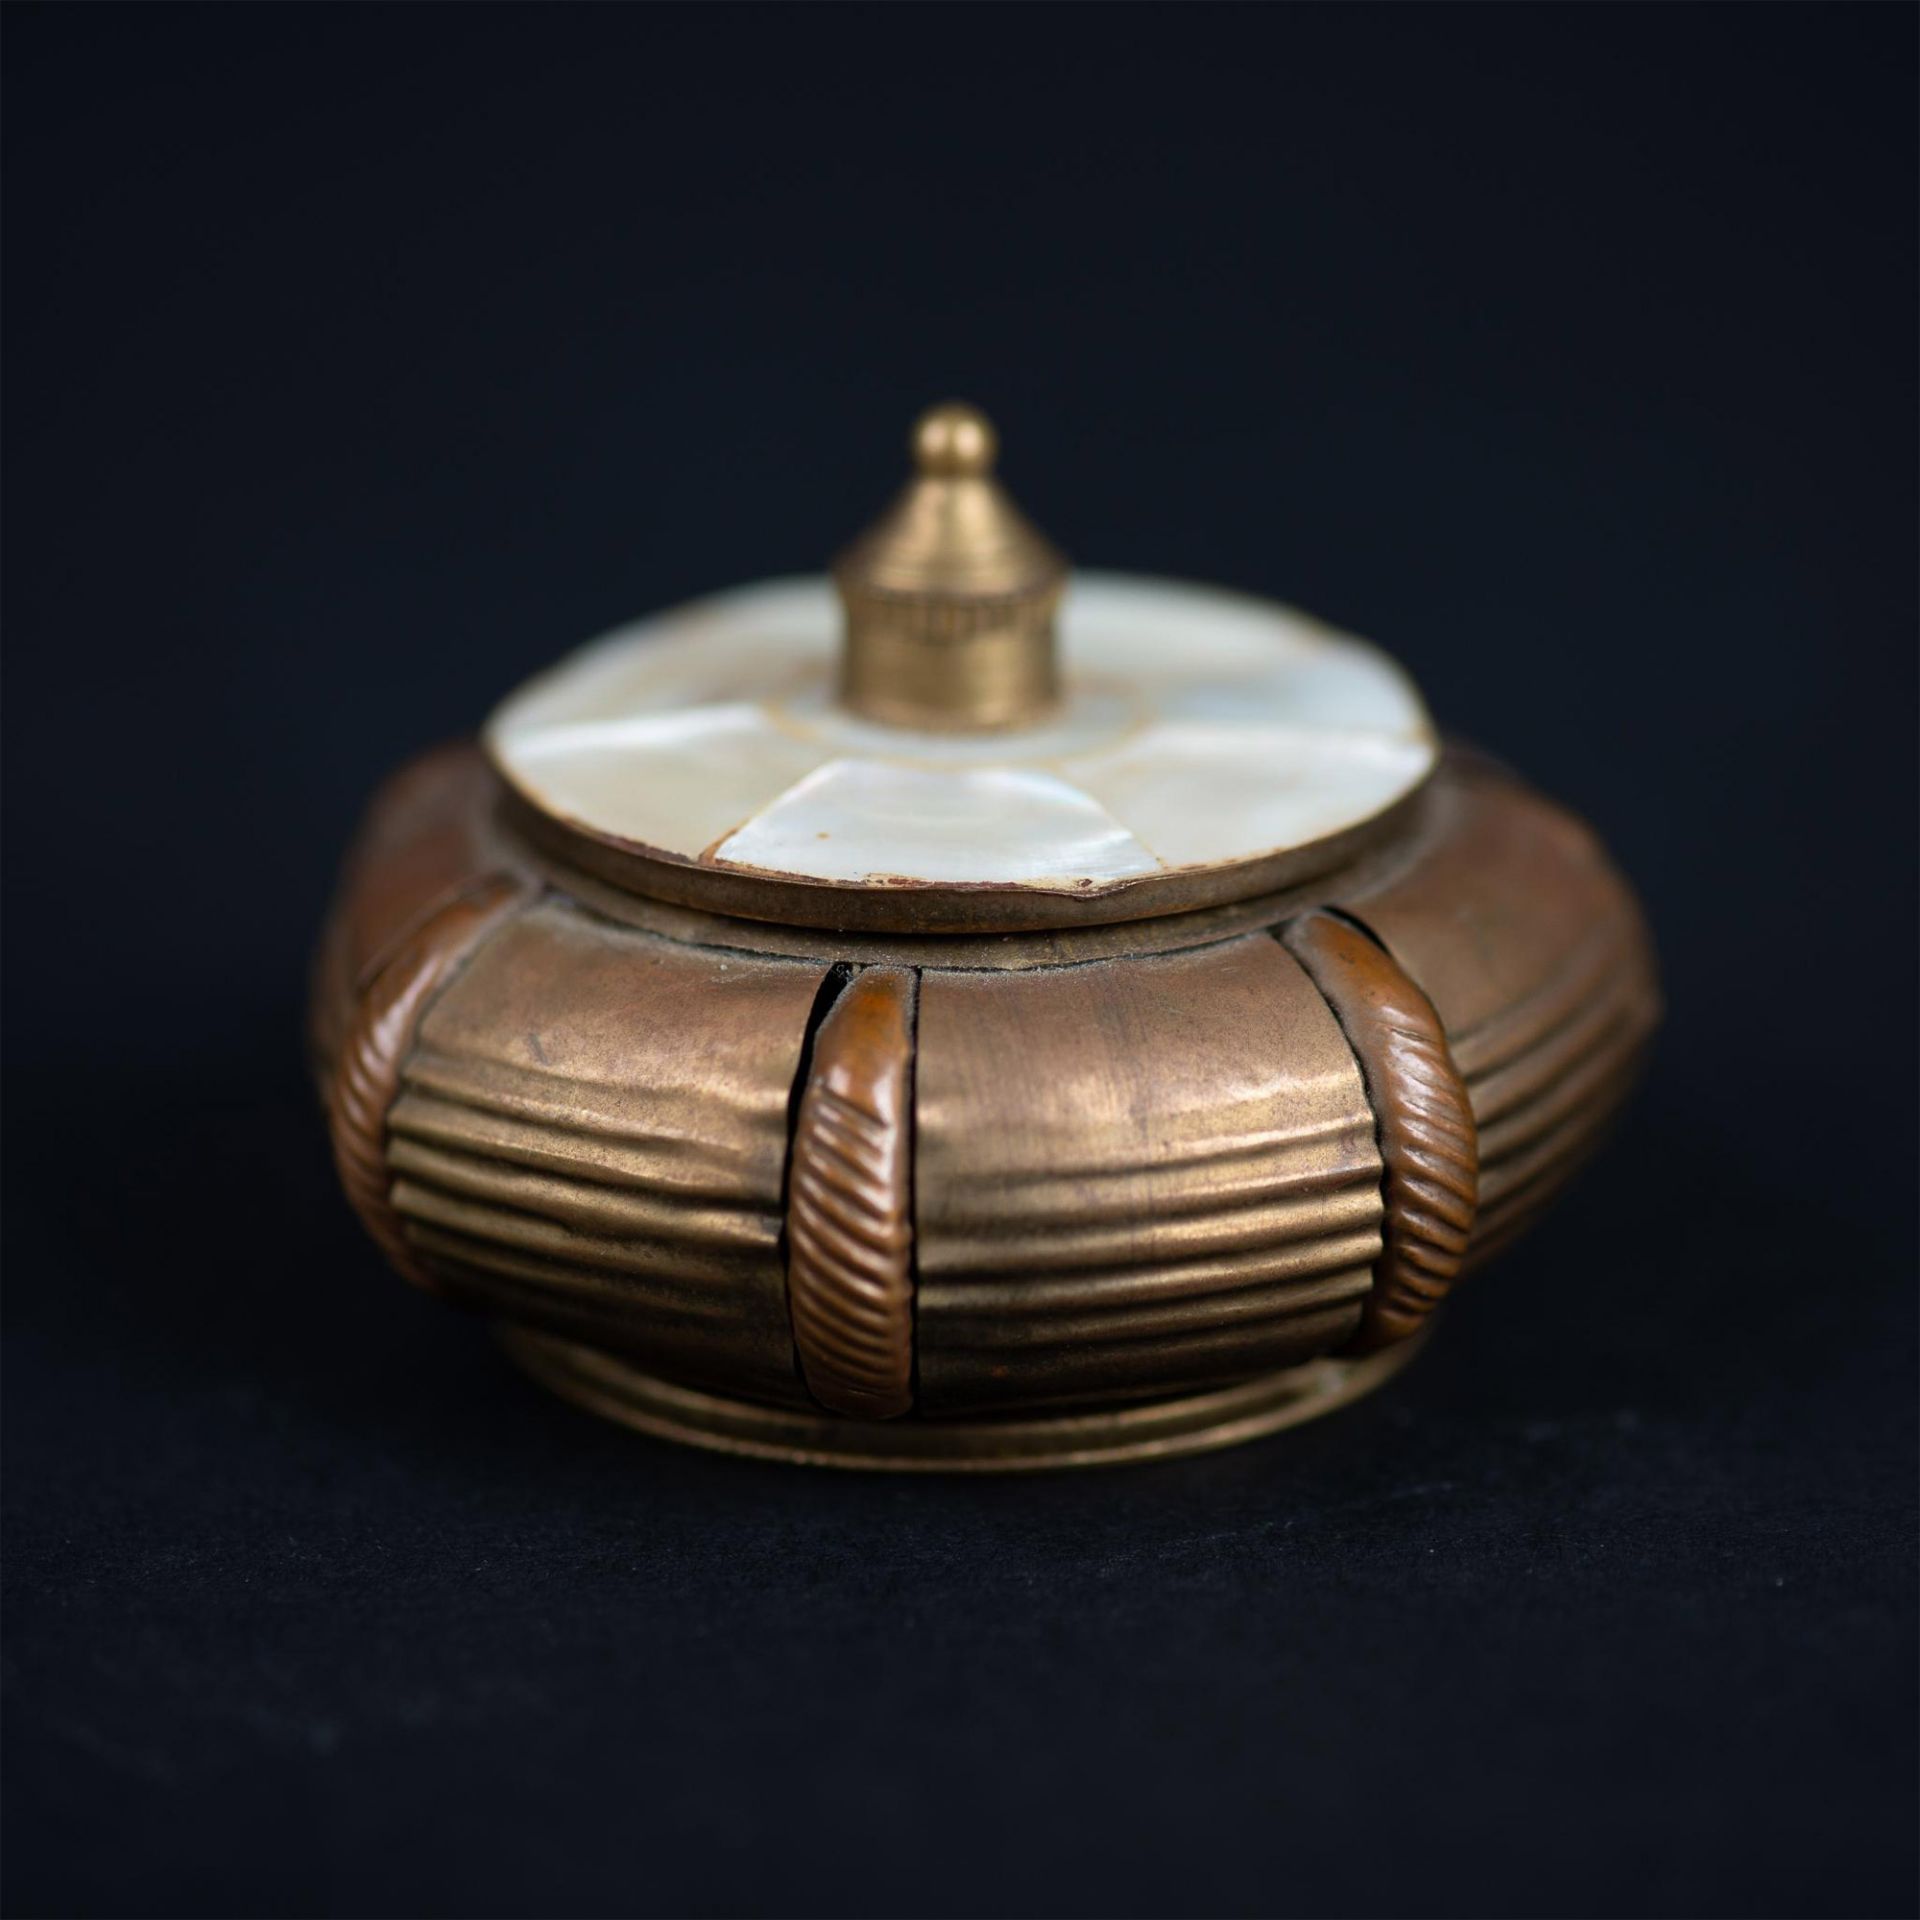 Vintage Brass & Mother of Peal Trinket Box - Image 2 of 3